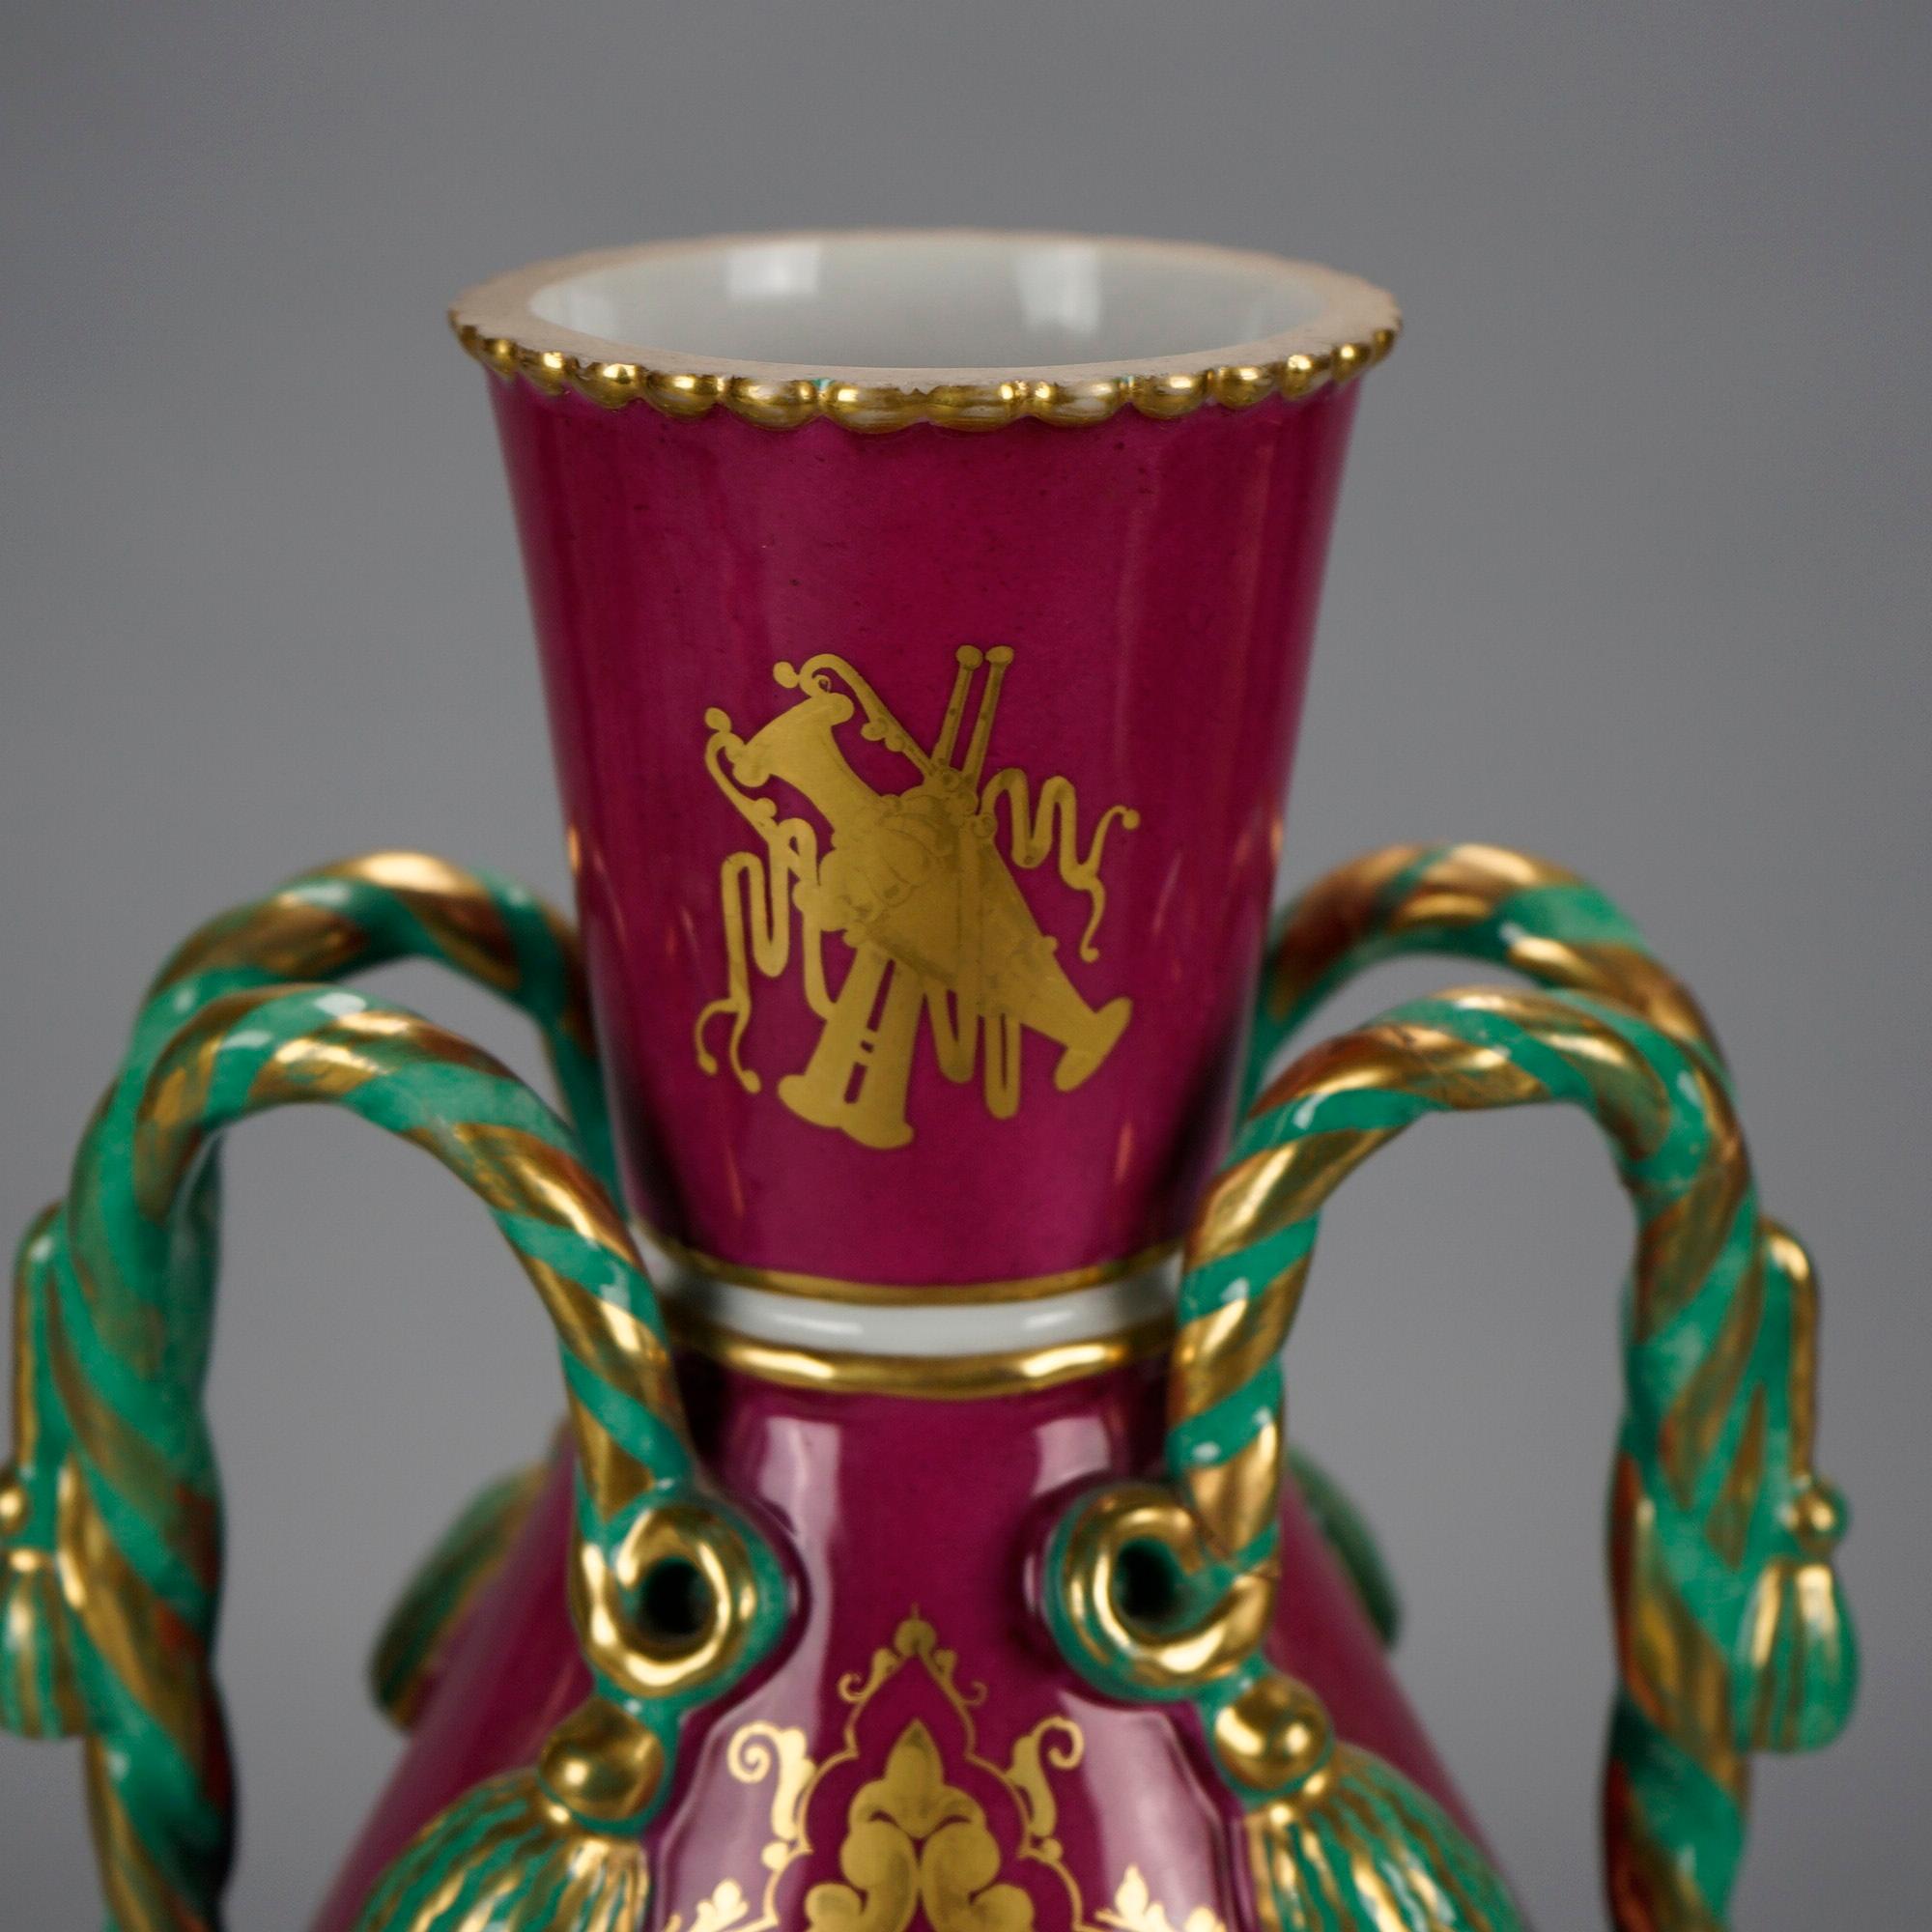 Antique Oversized Old Paris Porcelain Genre Vase with Tassel from Handles, 19thC For Sale 1